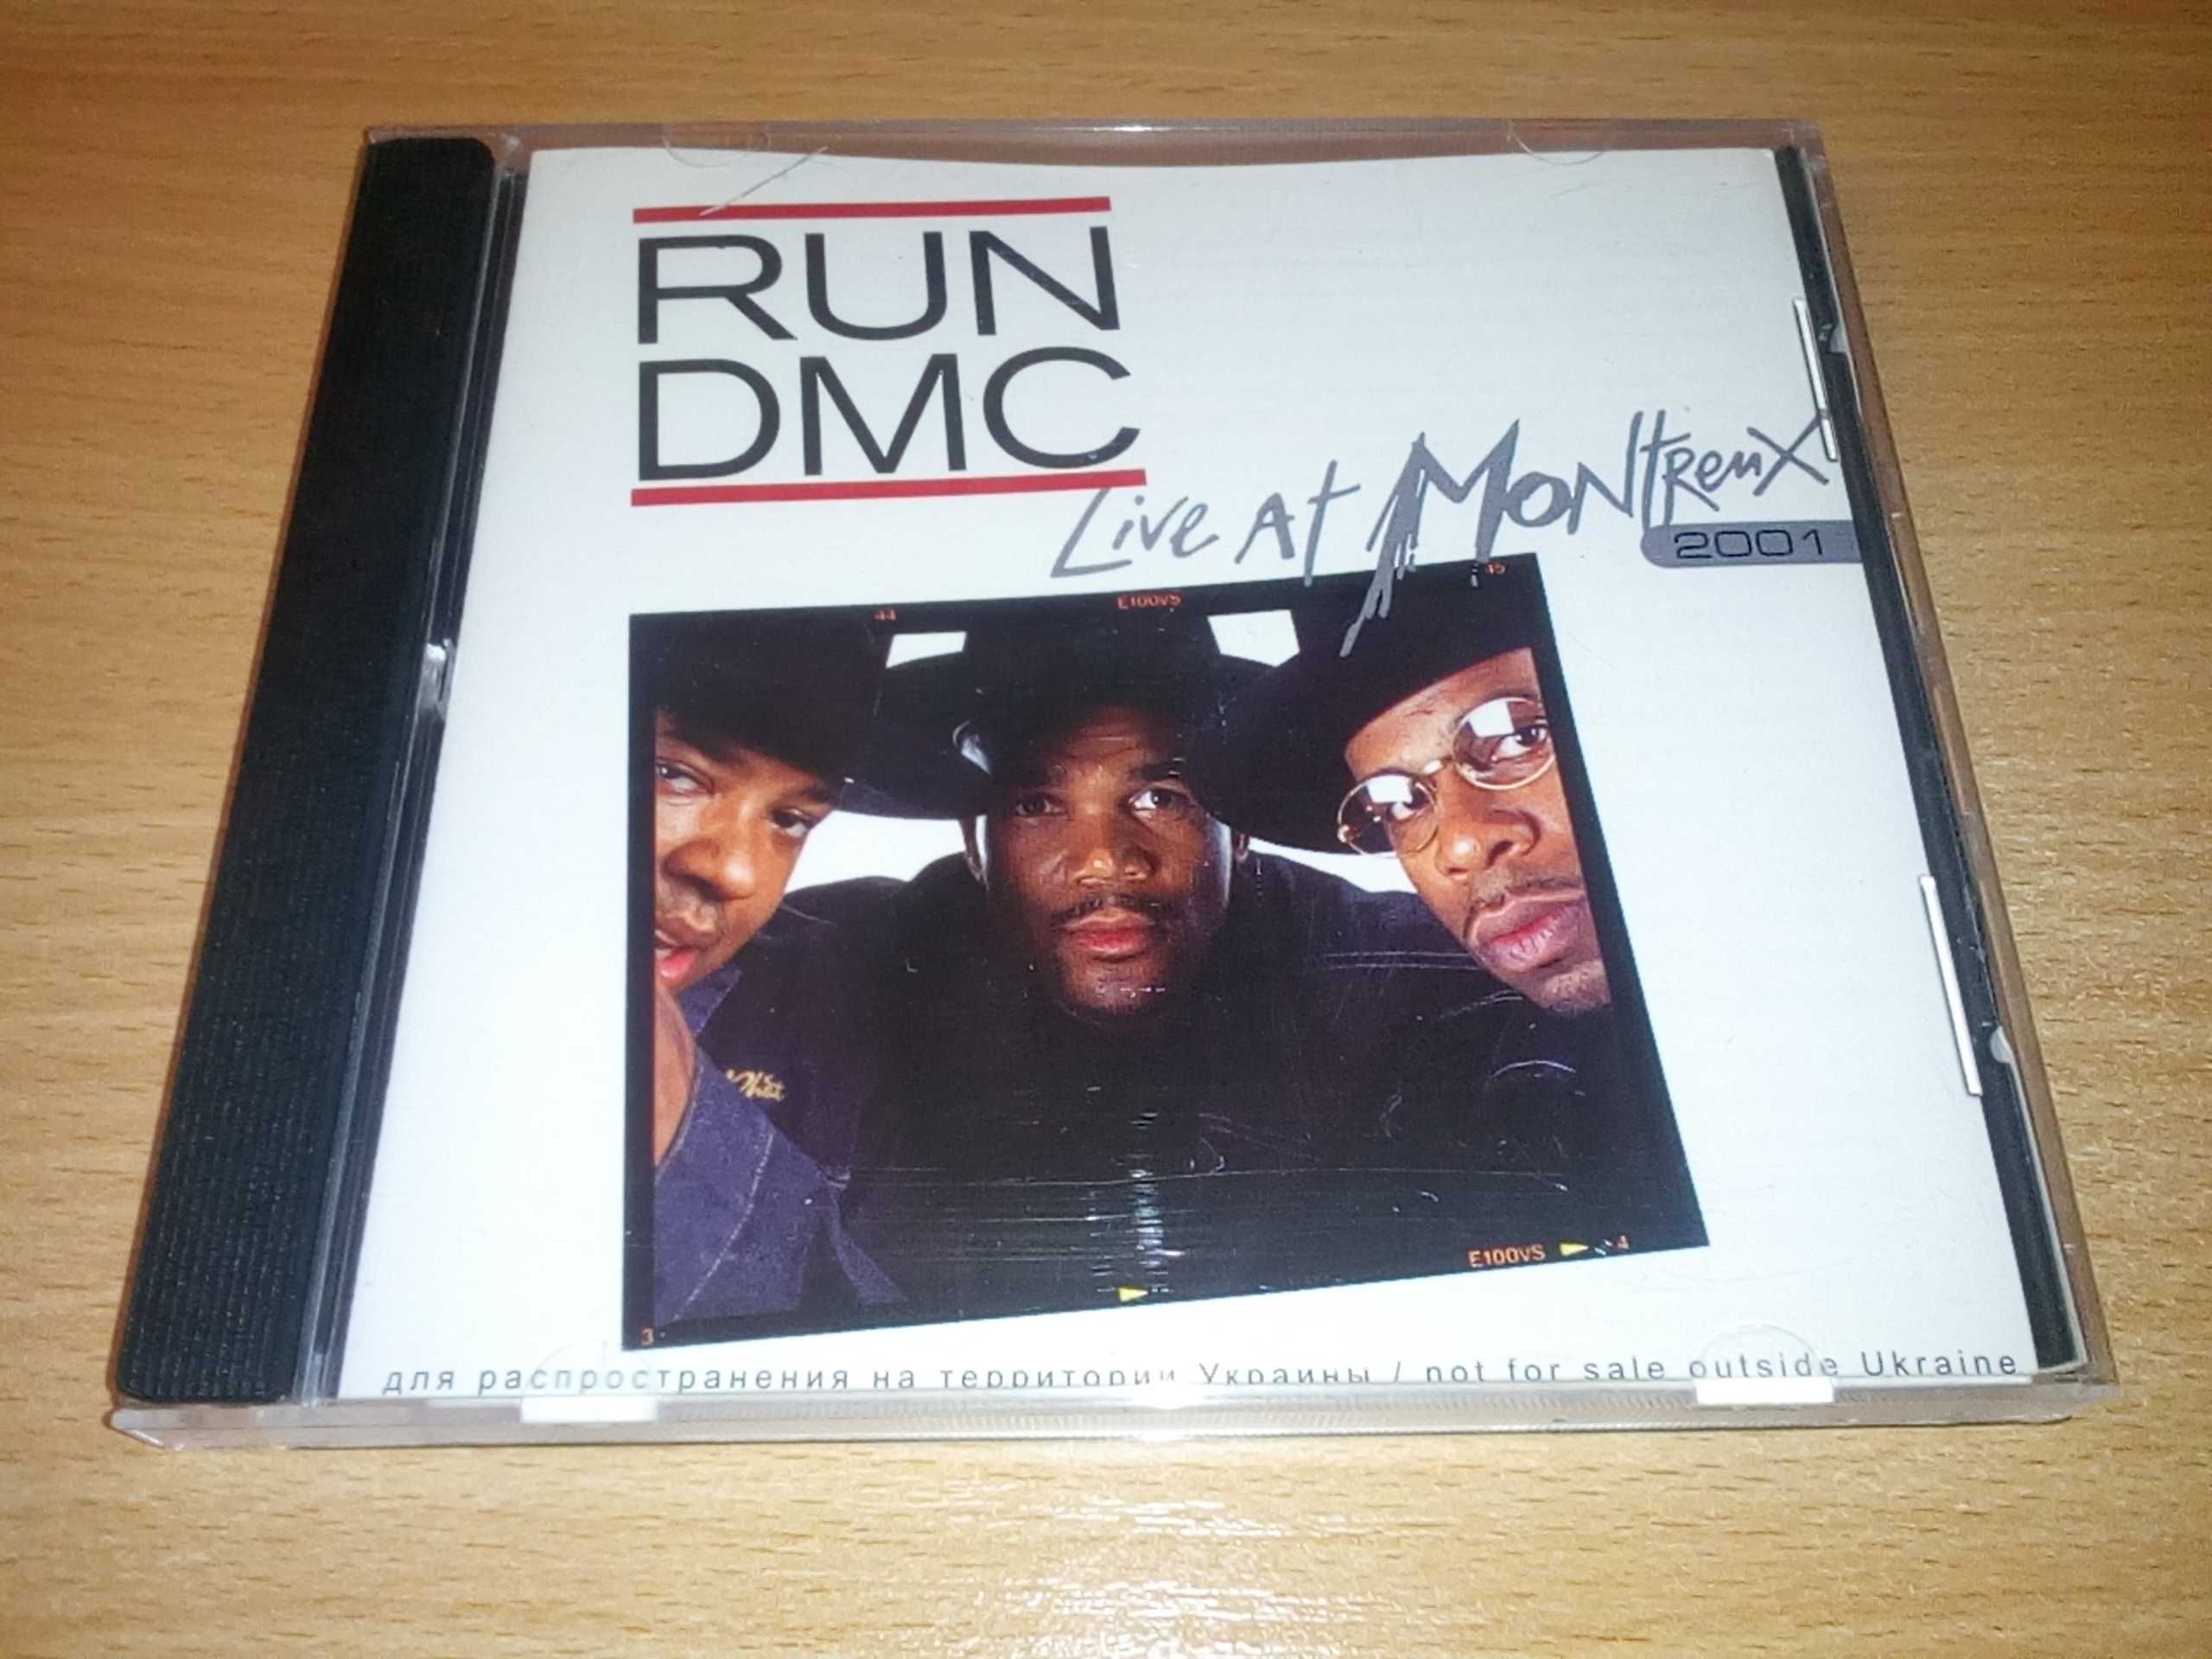 Run DMC ‎– Live at Montreux 2001